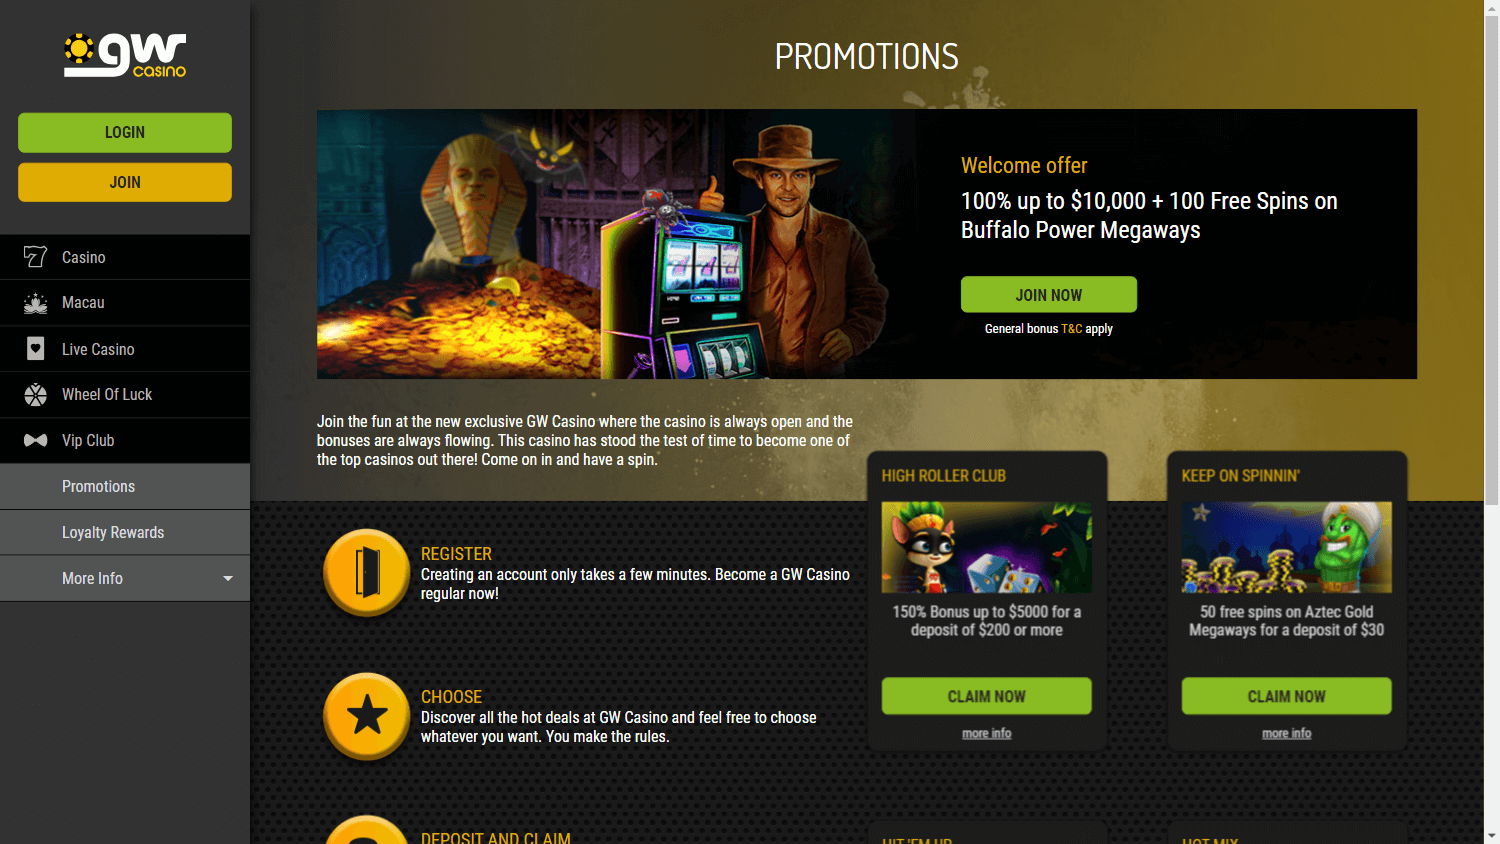 gw_casino_promotions_desktop